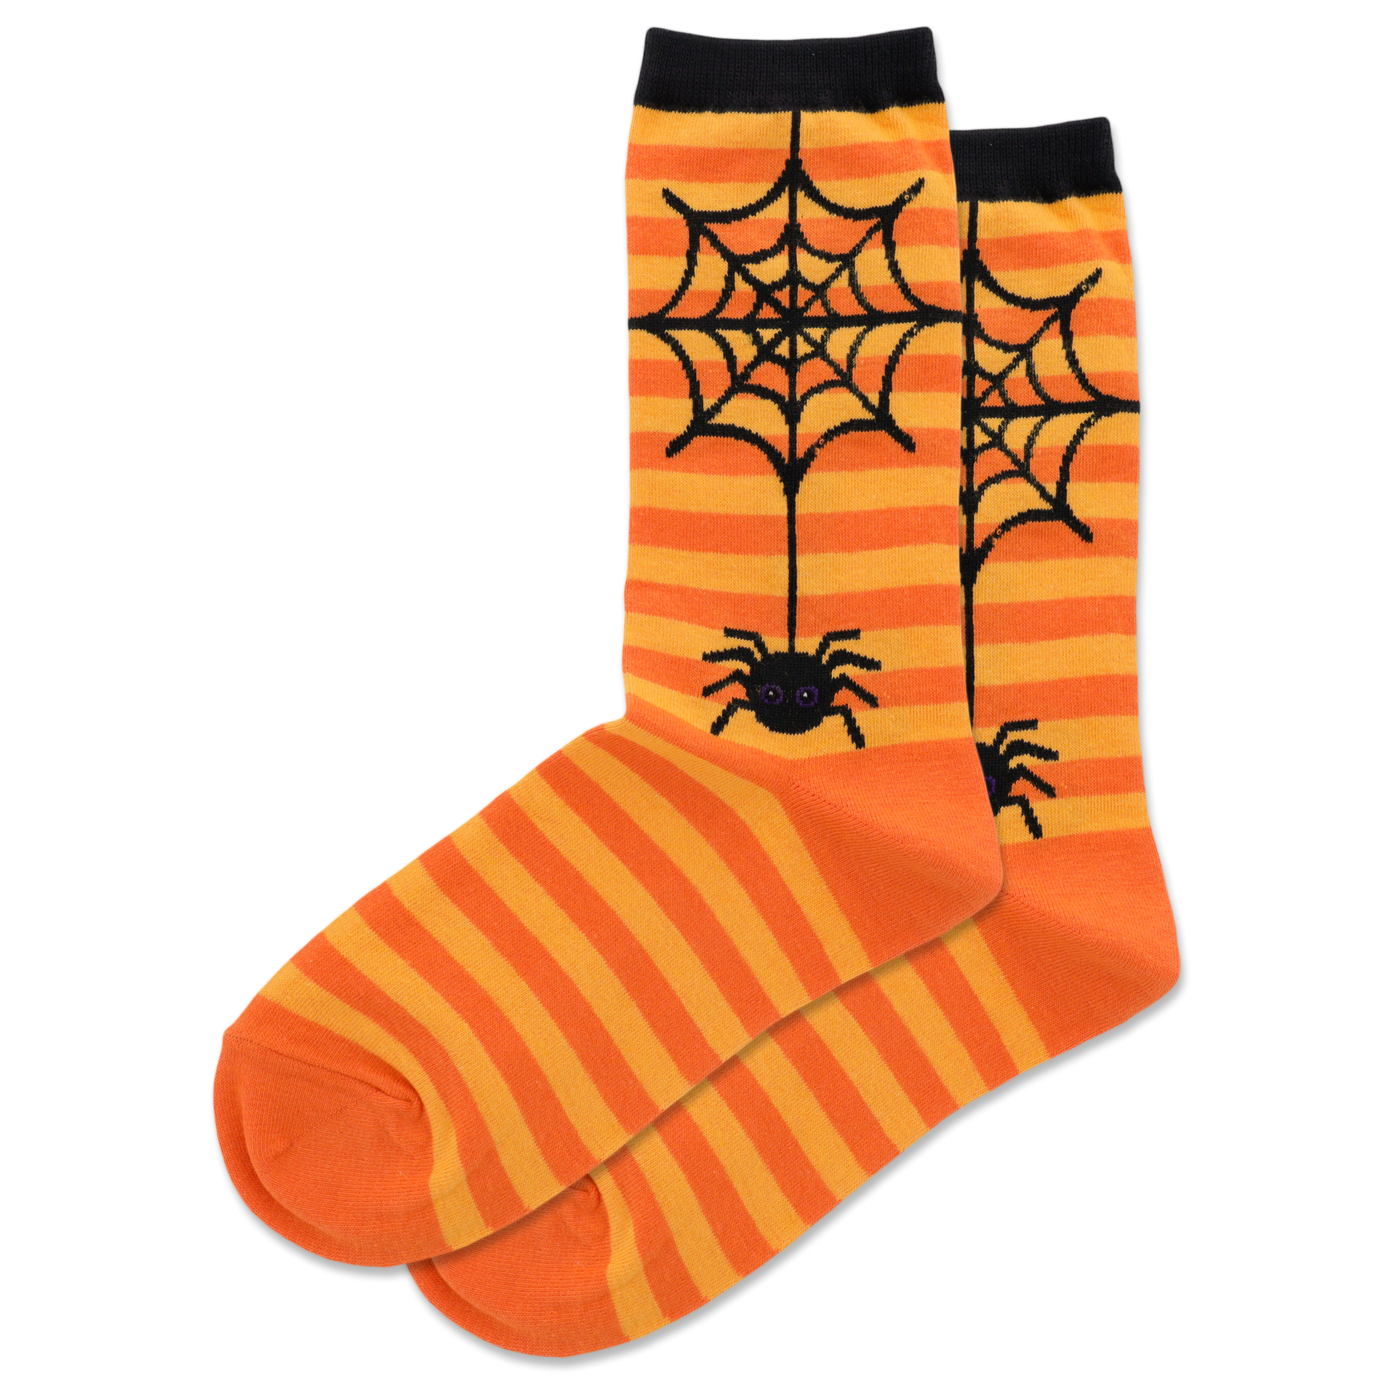 "Spider Stripe" Crew Socks by Hot Sox - Medium